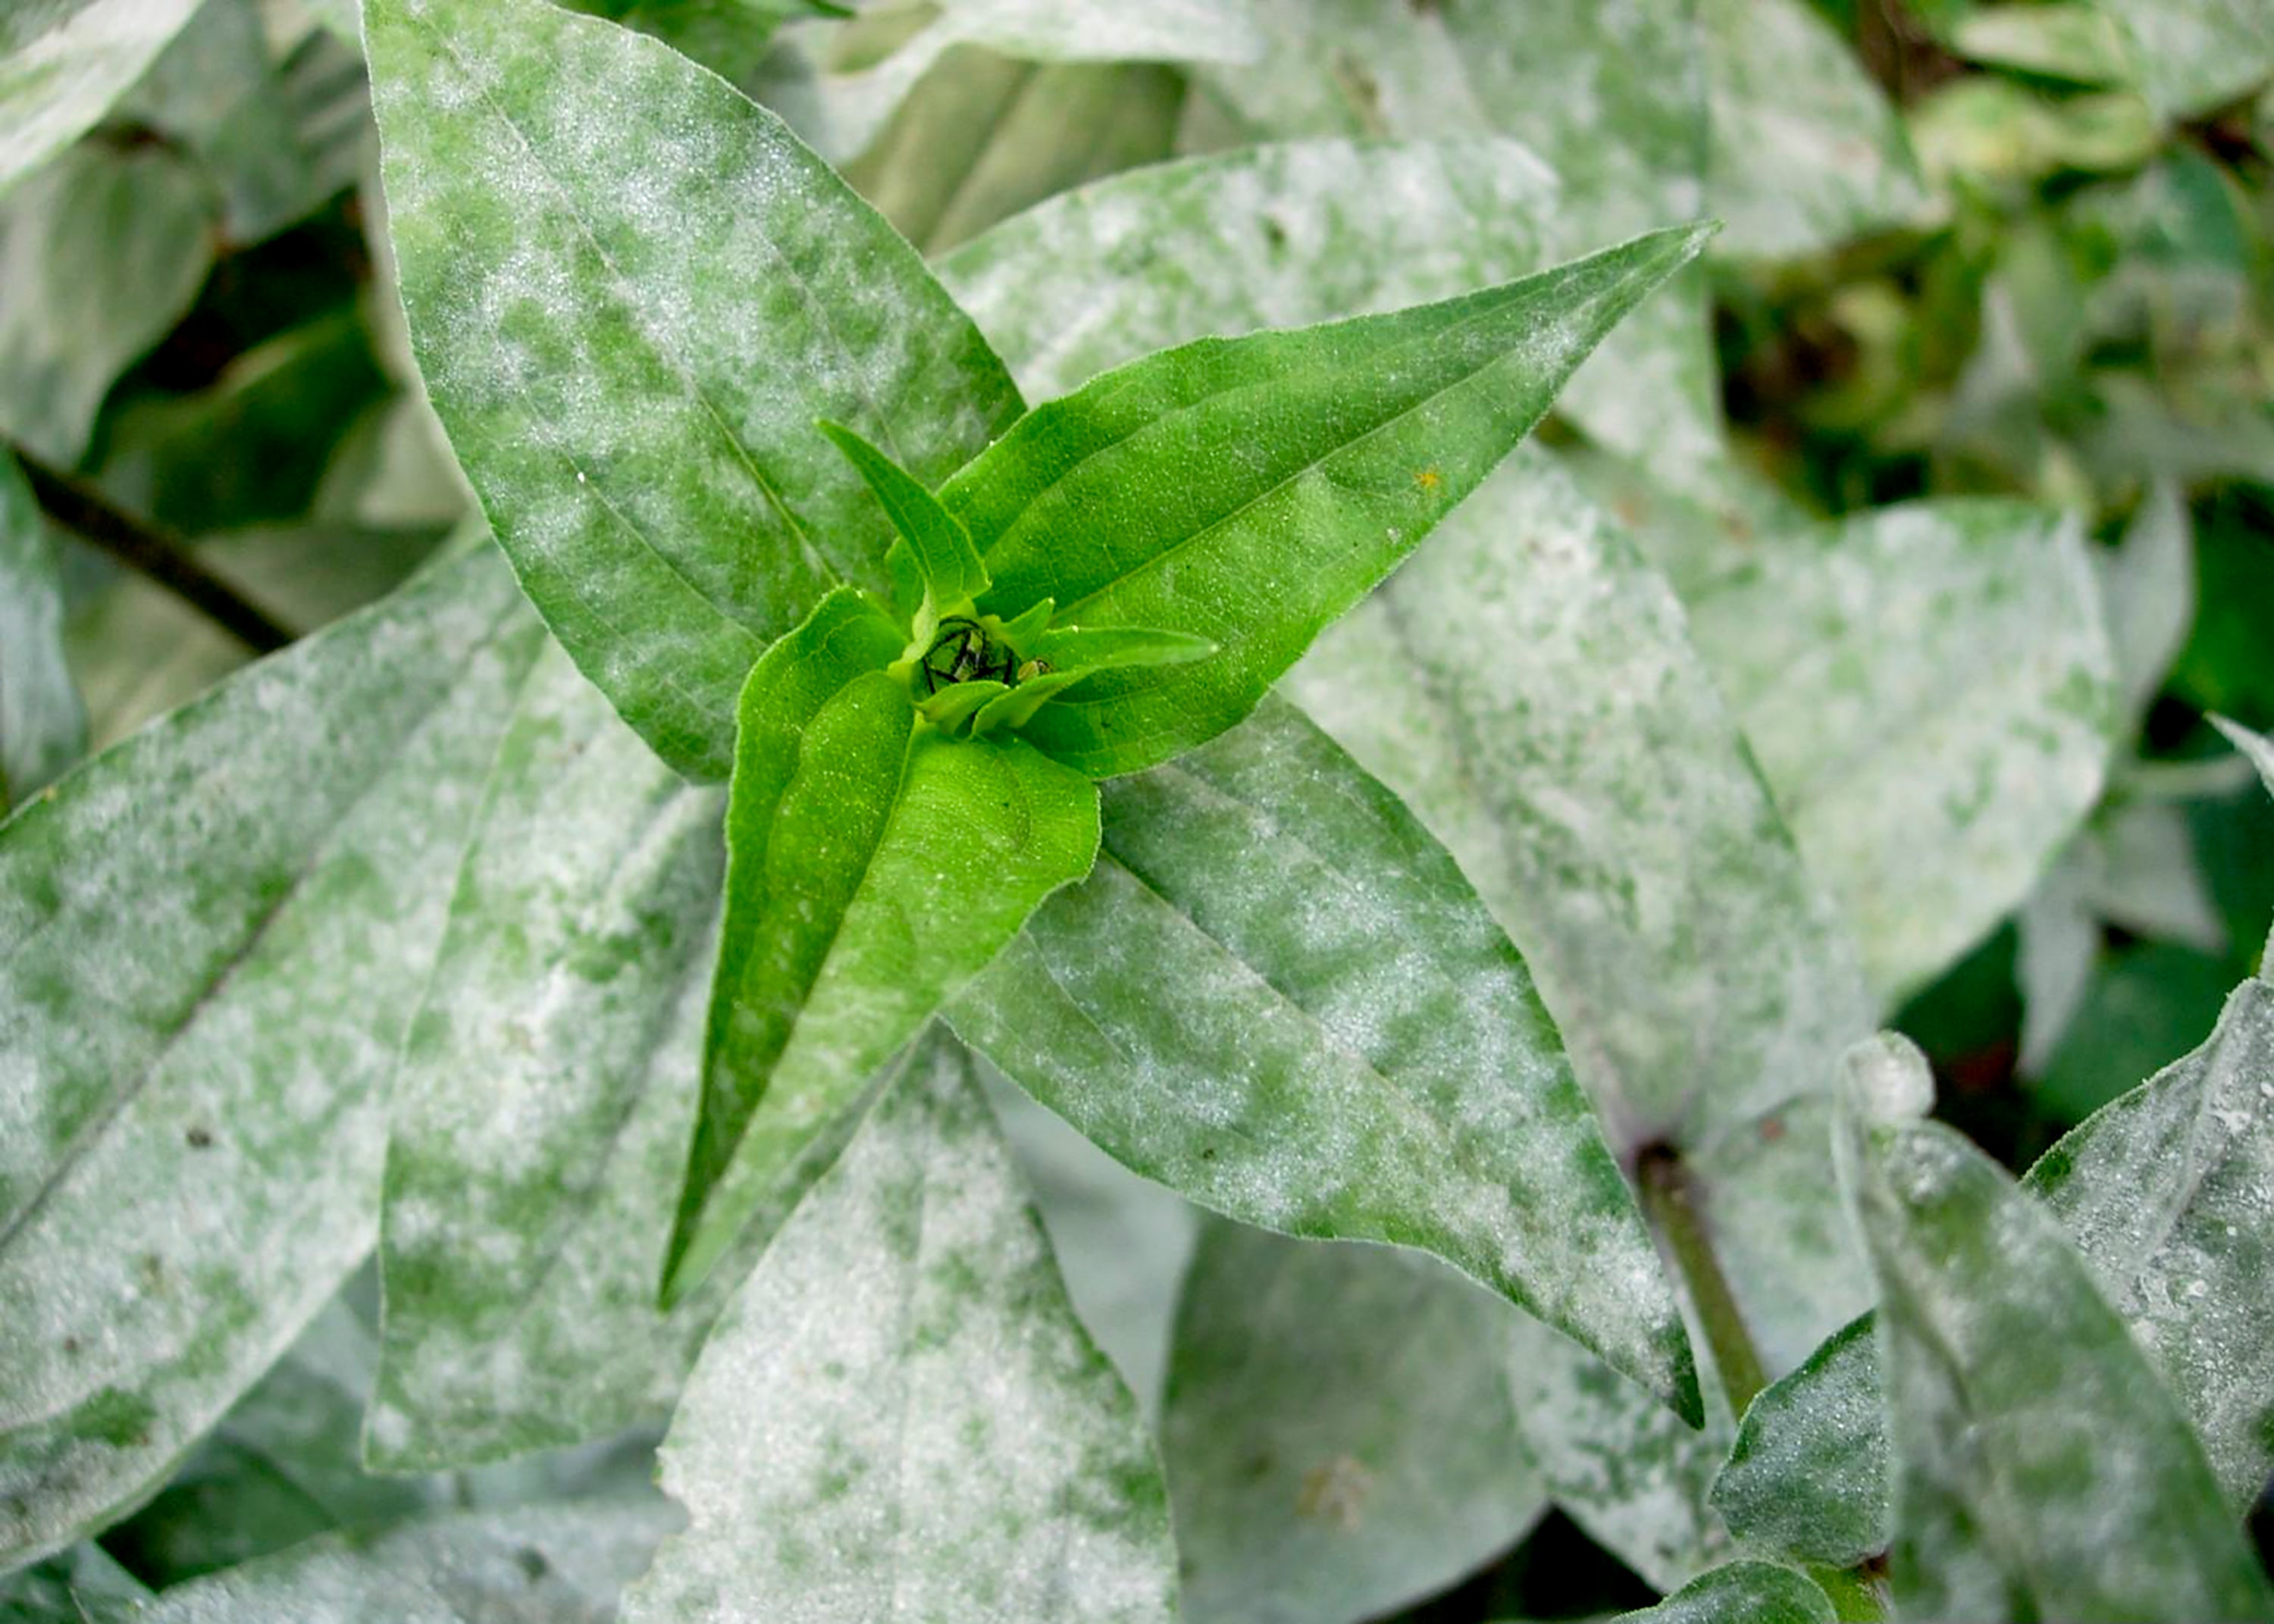 This image provided by Bugwood.org shows powdery mildew symptoms on zinnia foliage